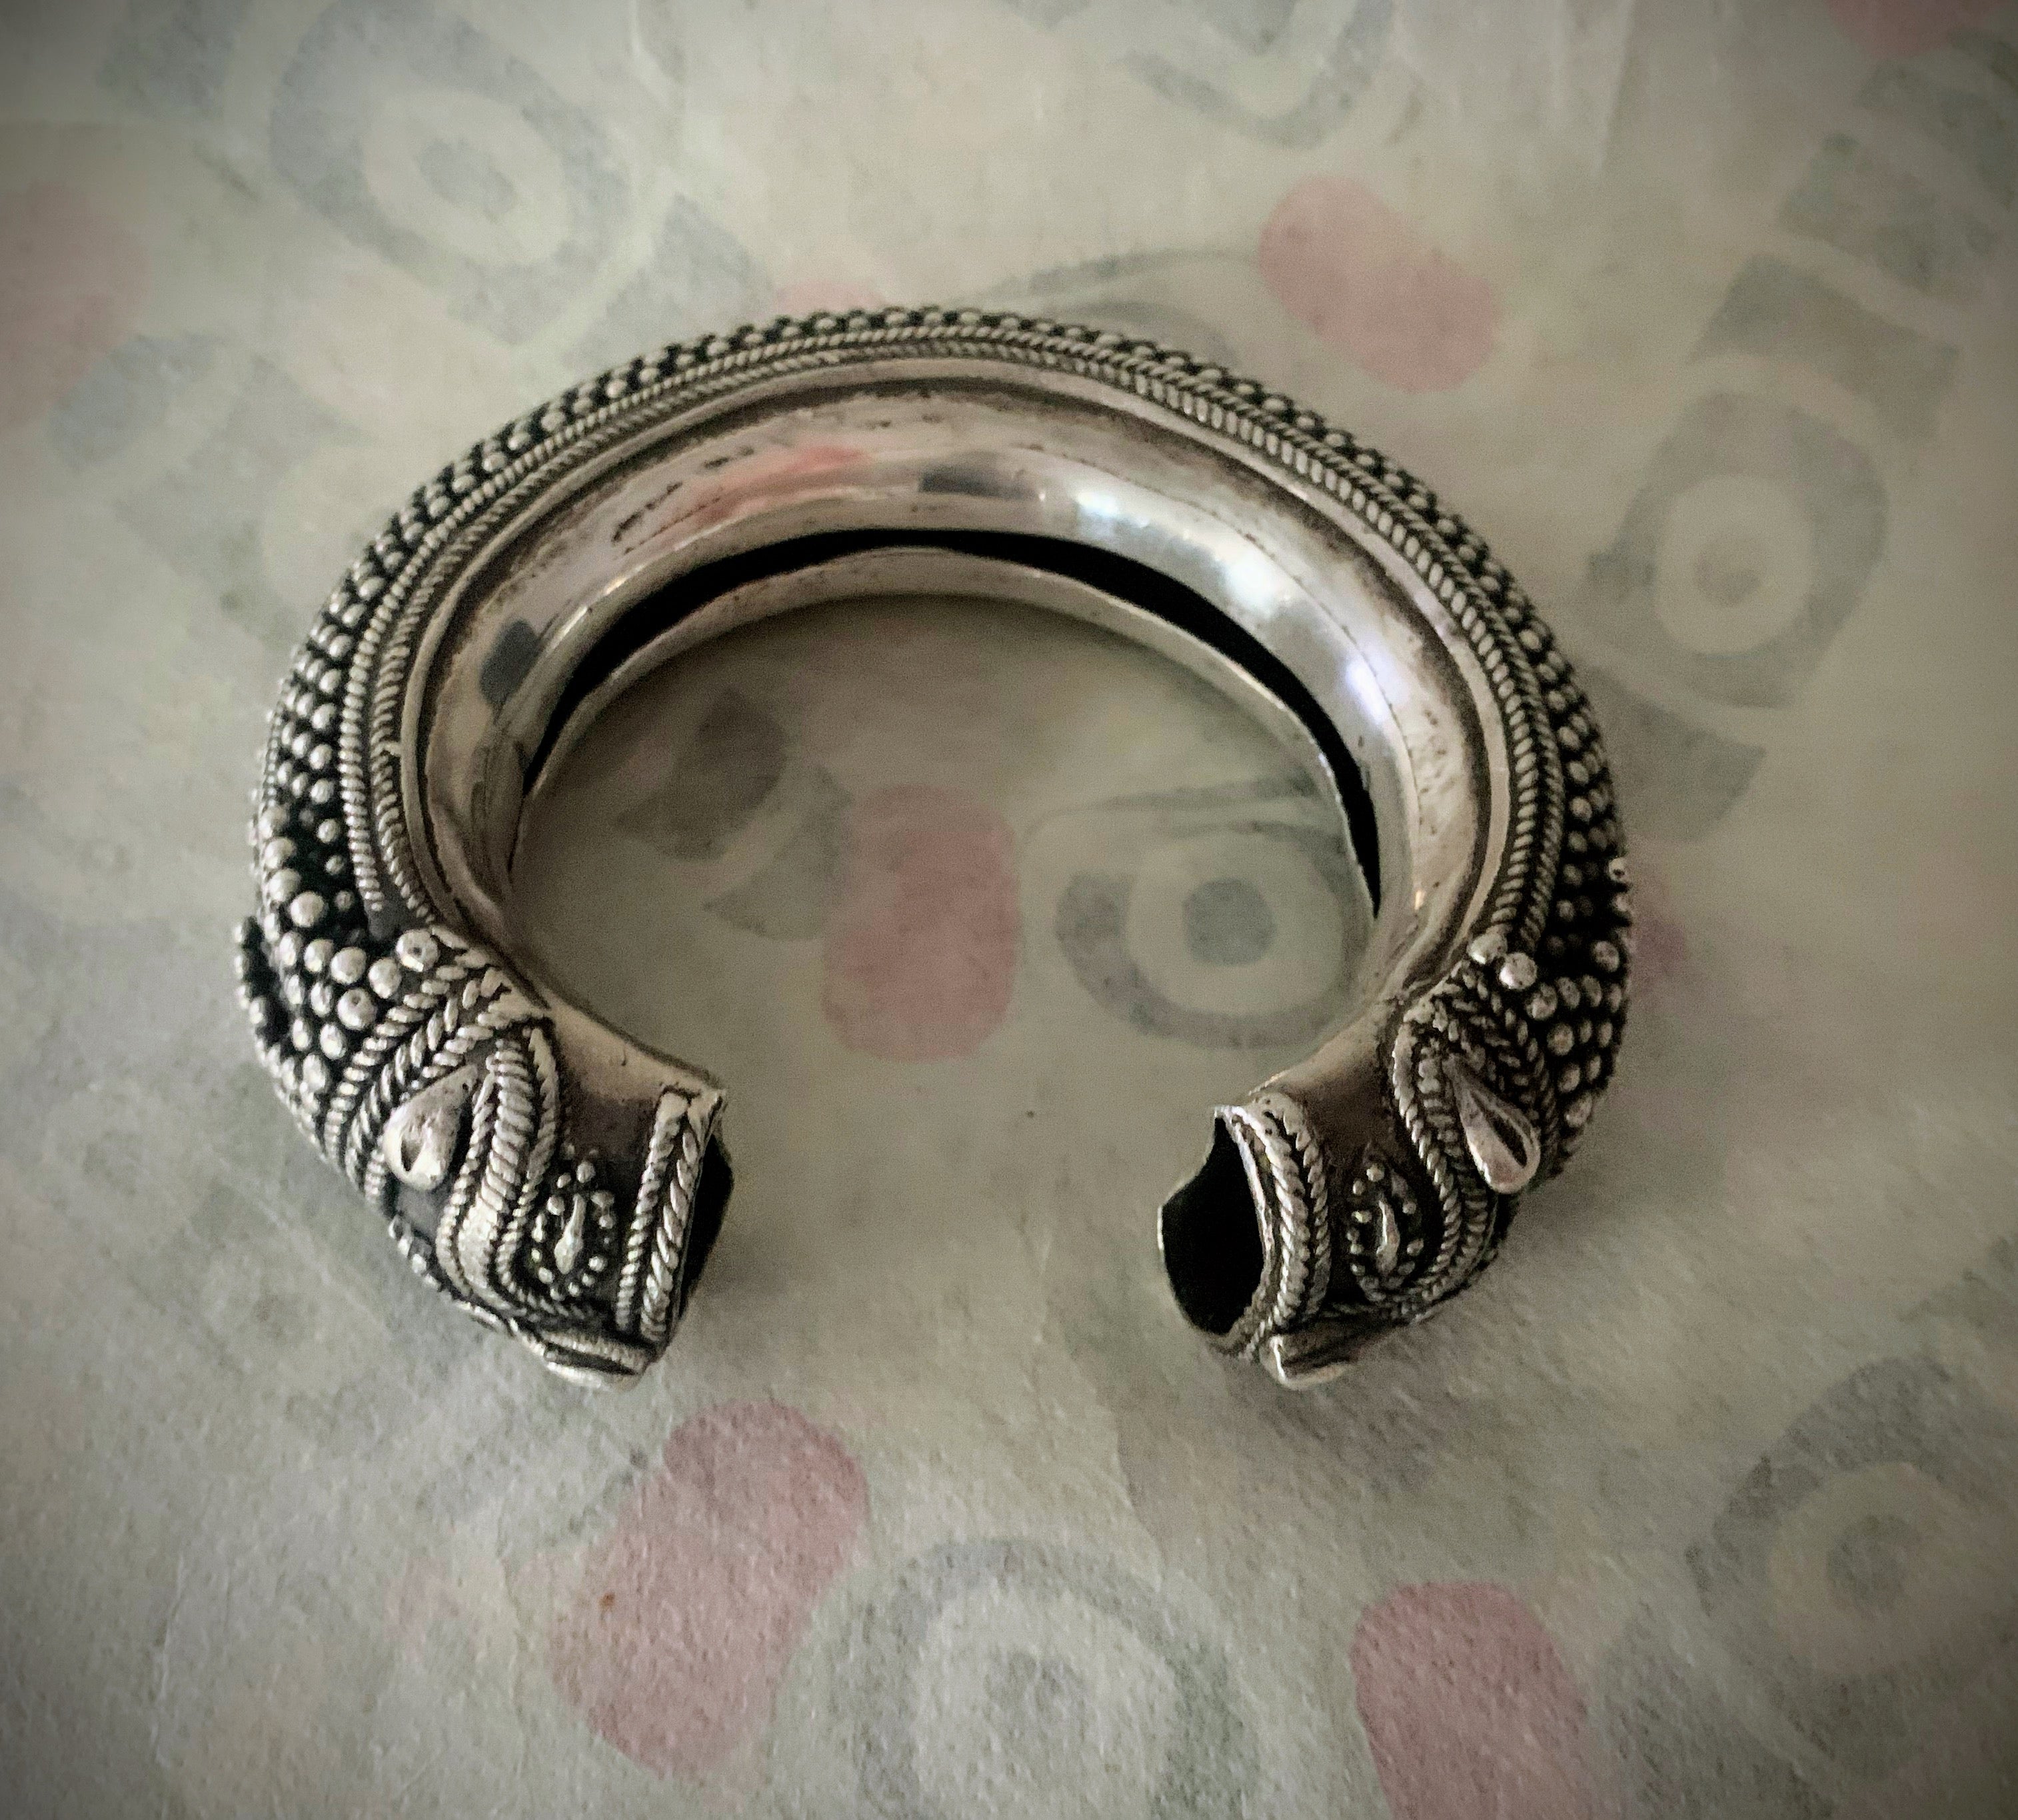 Antique Silver bracelet from India - Shaila